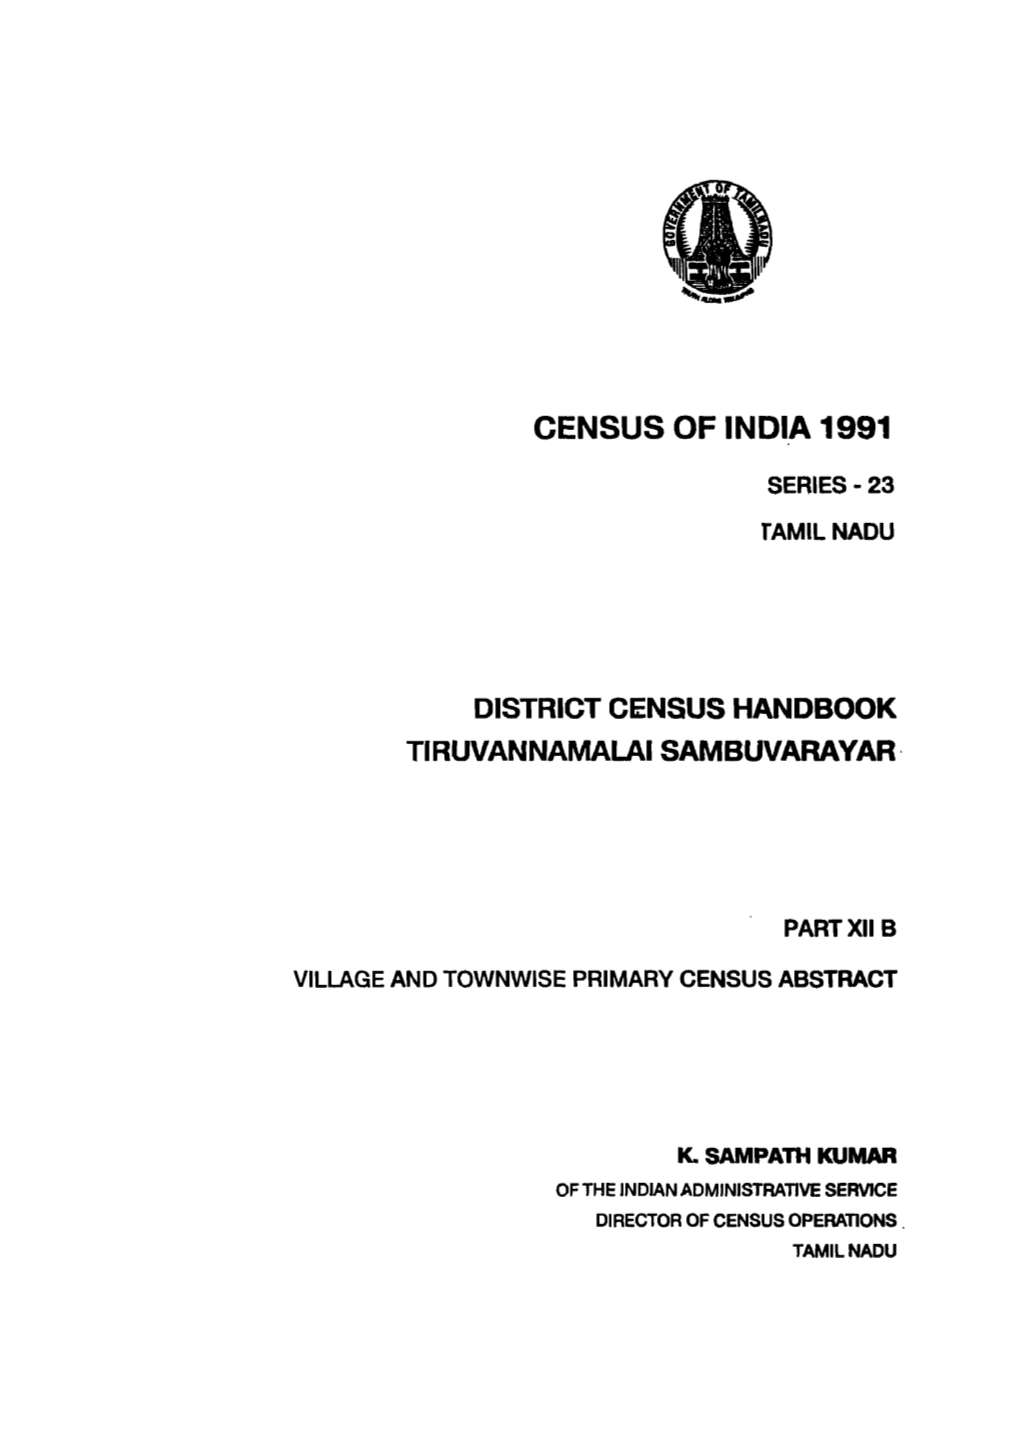 District Census Handbook, Tiruvannamalai Sambuvarayar, Part XII-B, Series-23